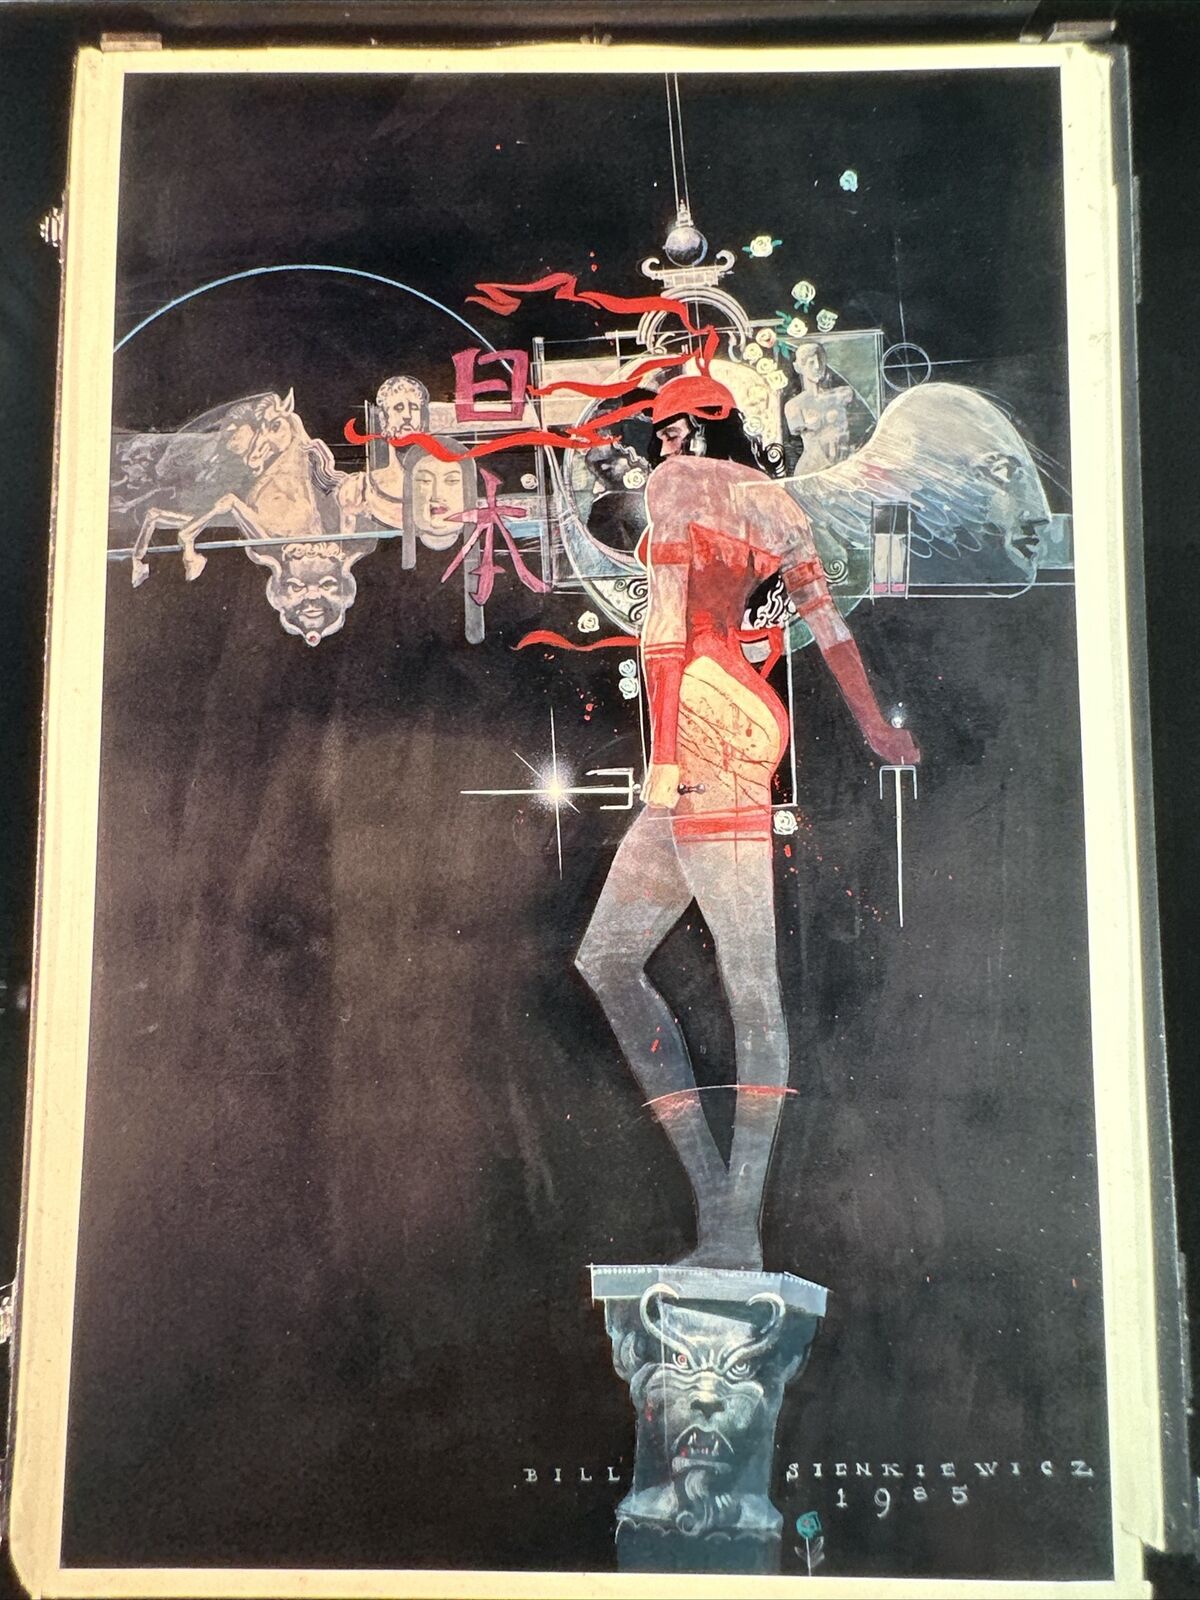 1985 Elektra Assassin Poster Bill Sienkiewicz Art For Line Up 4” x 5” Chrome